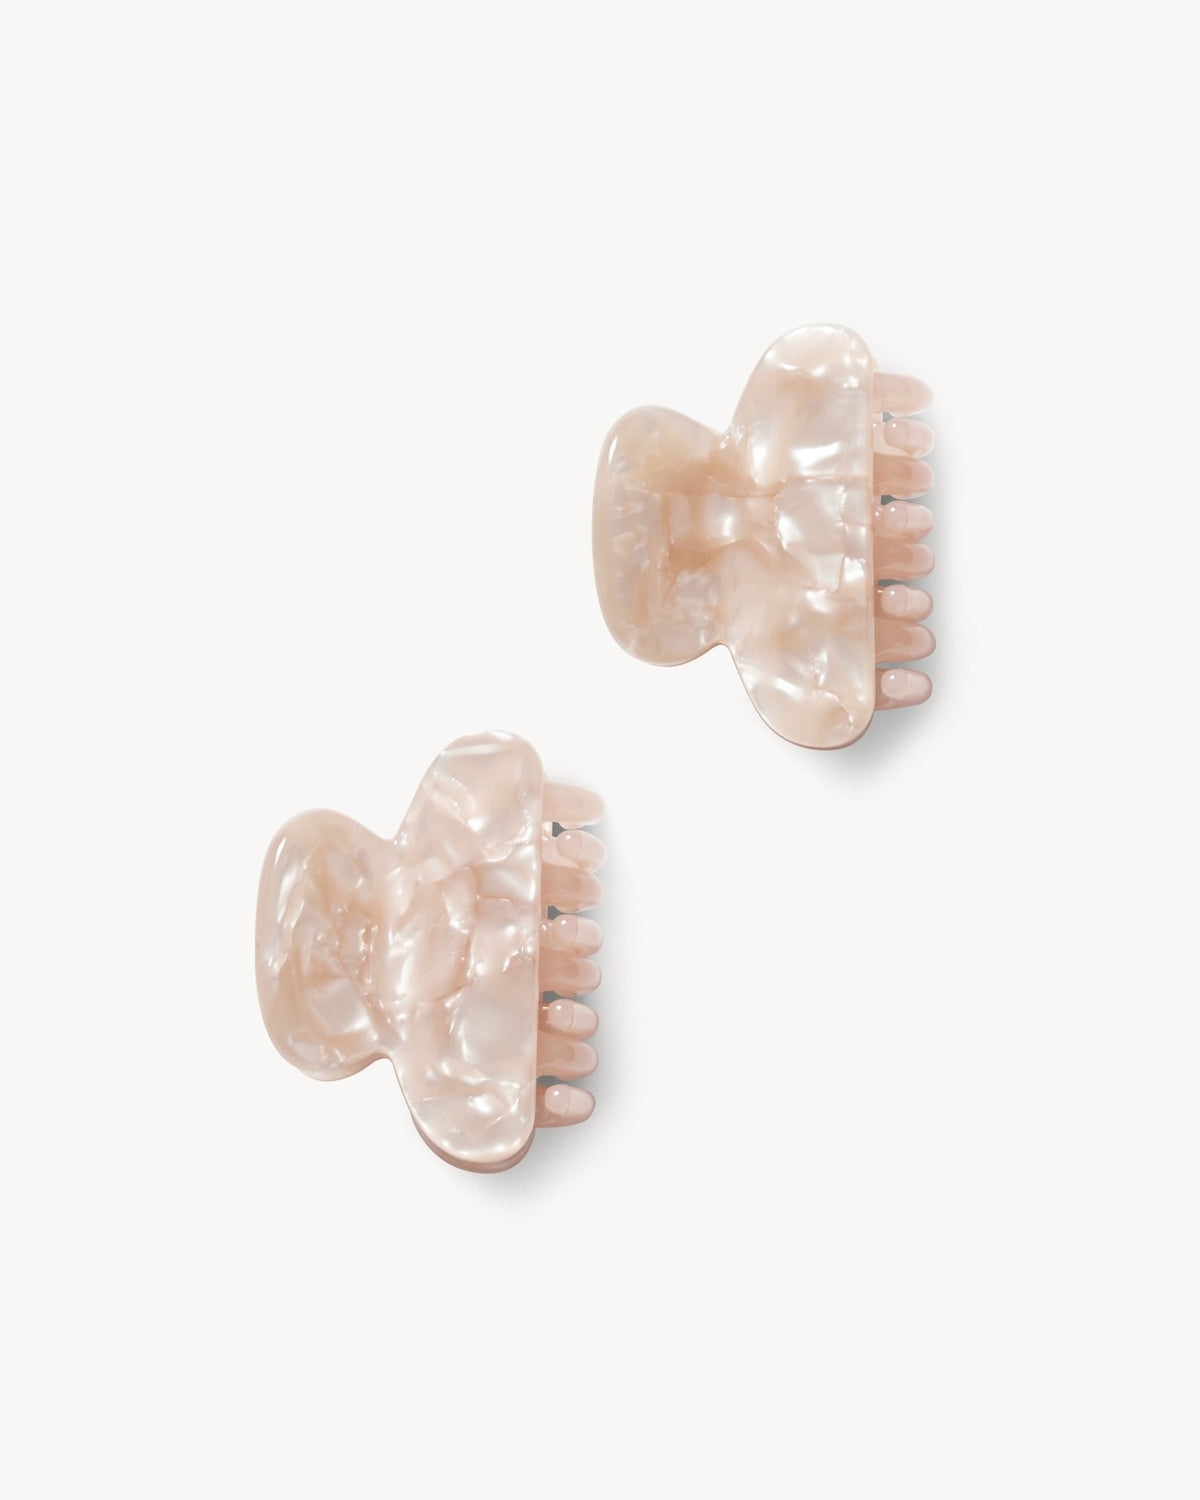 Twin Heirloom Claws in Peach Shell - MACHETE